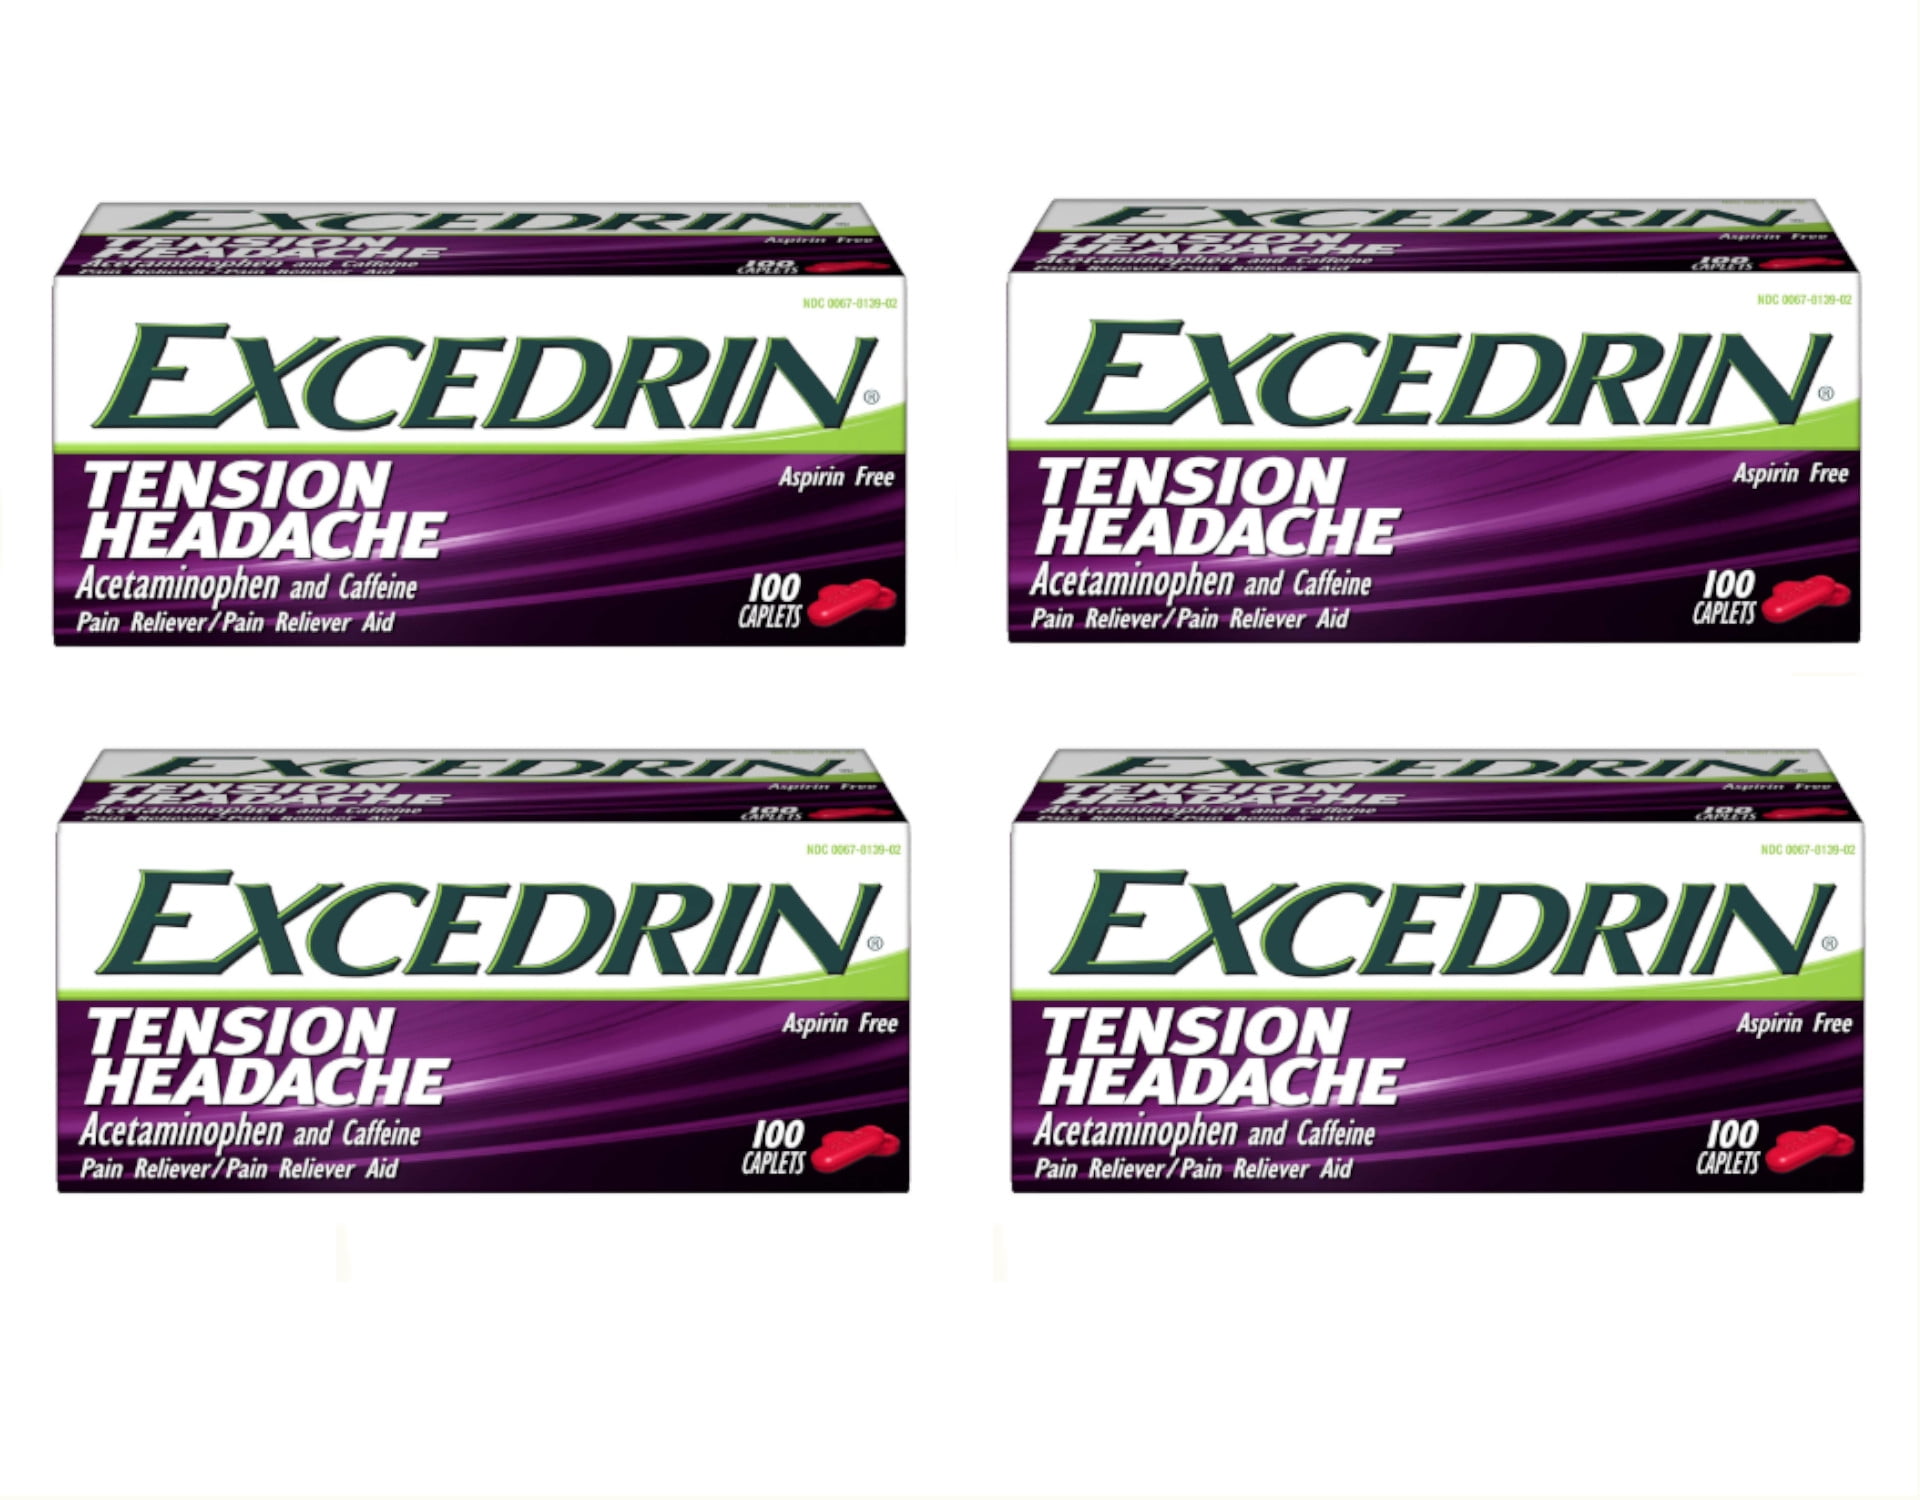 Excedrin temporarily halts production of 2 popular headache